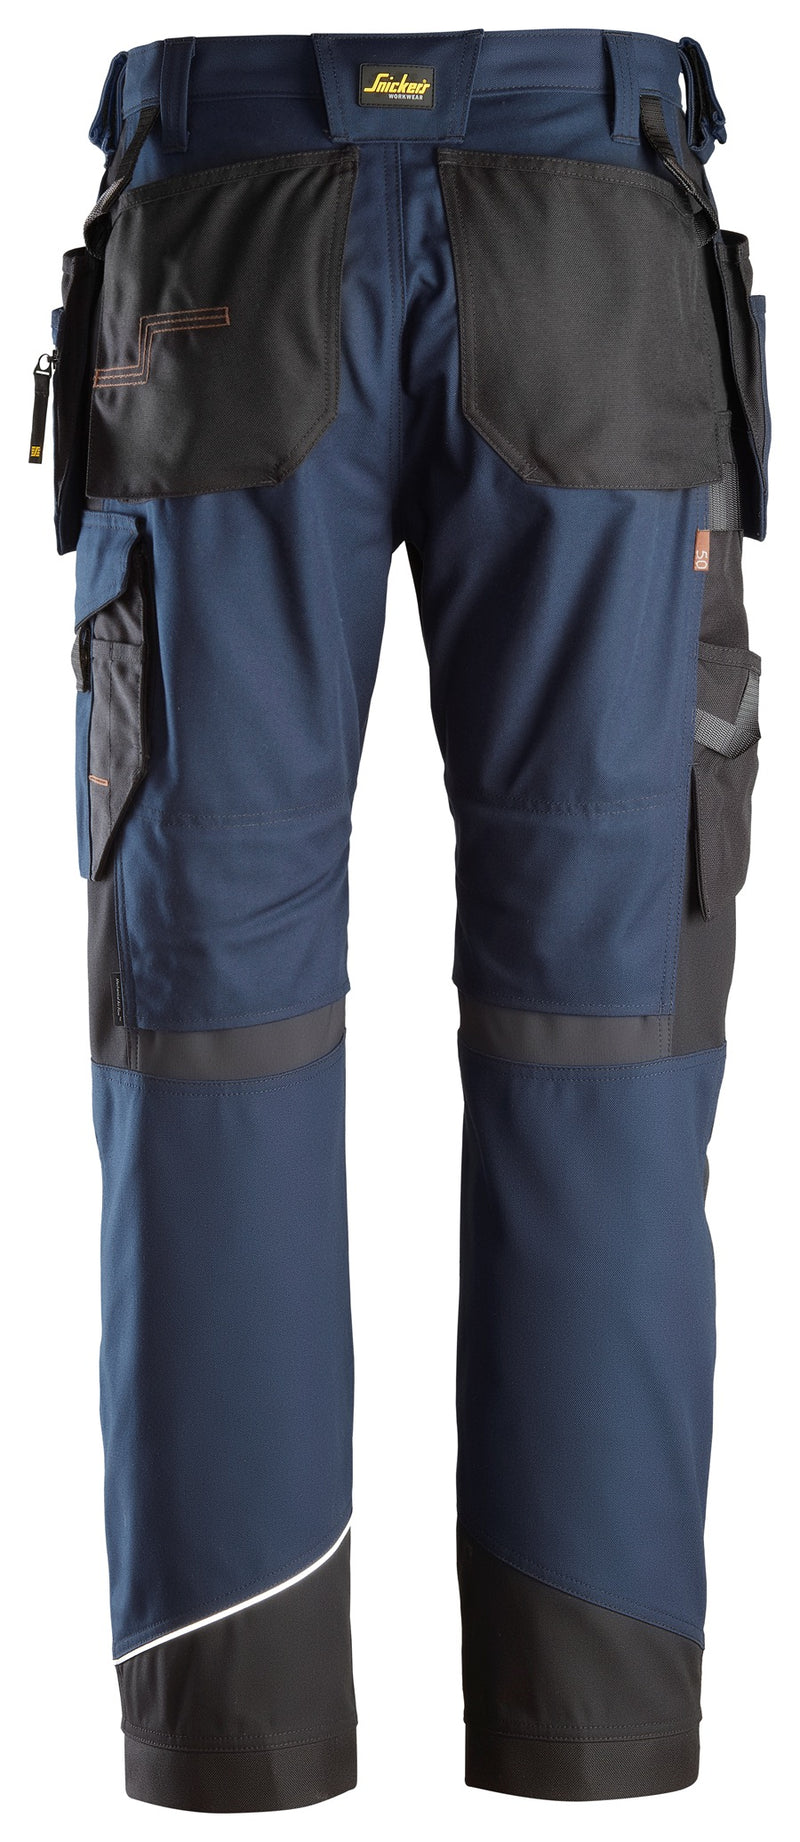 Snickers Workwear U6214 RuffWork Canvas Work Pants + Holster Pockets - Navy/Black